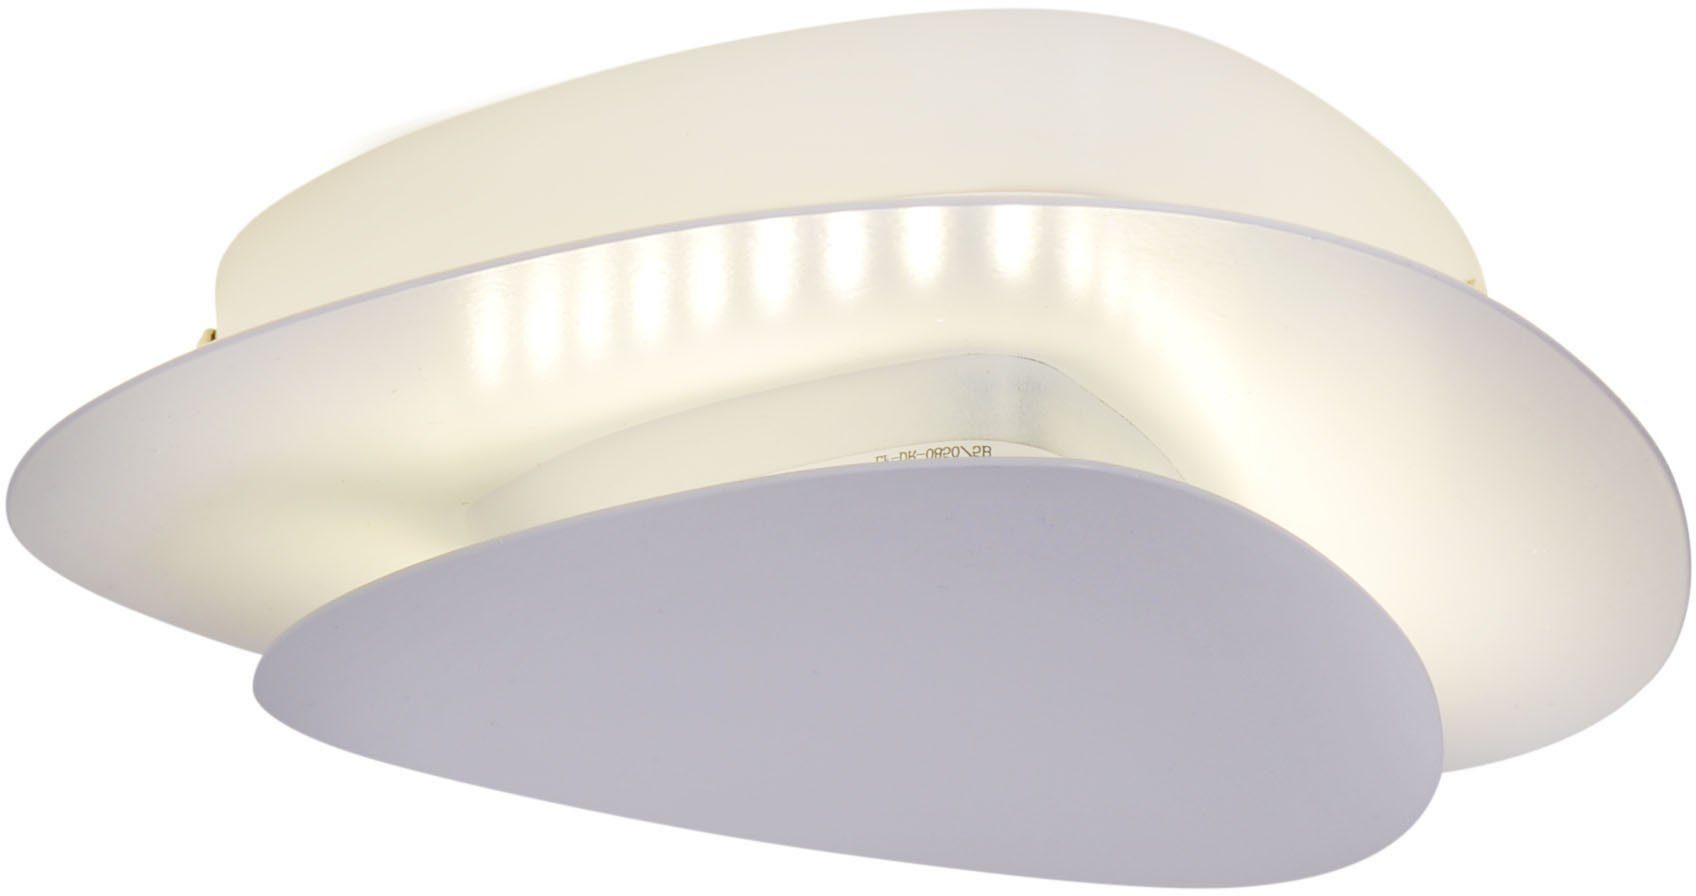 näve LED Deckenleuchte Liso, LED fest integriert, Warmweiß, Energieeffizienzklasse G, incl. Treiber, Material: Metall, Farbe: weiß | Deckenlampen